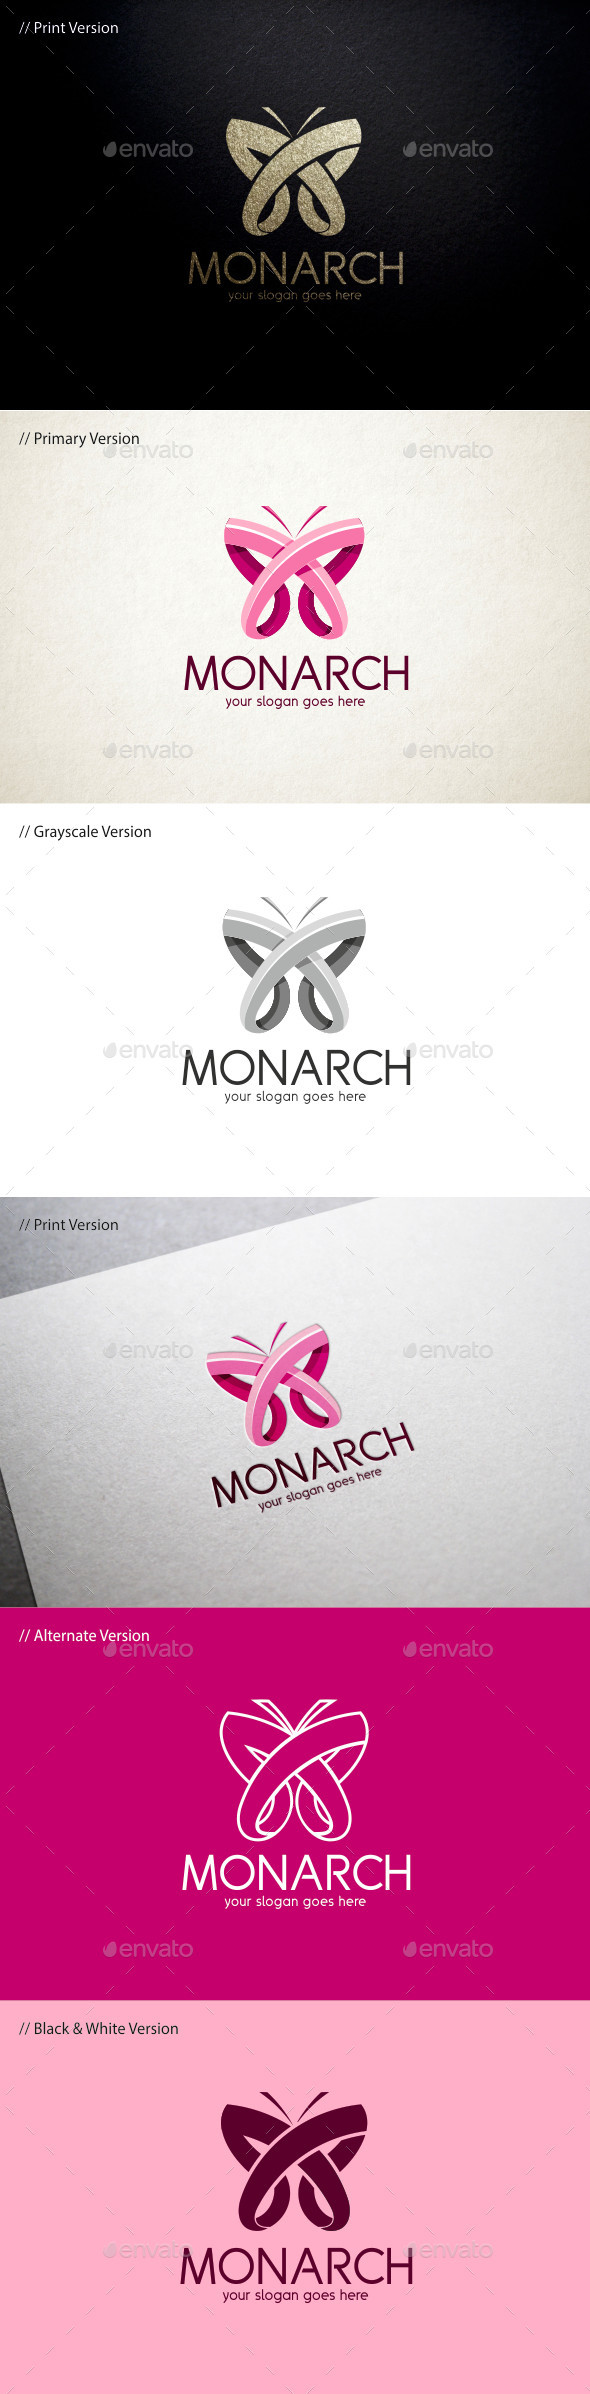 Monarch 20logo 20template 20590